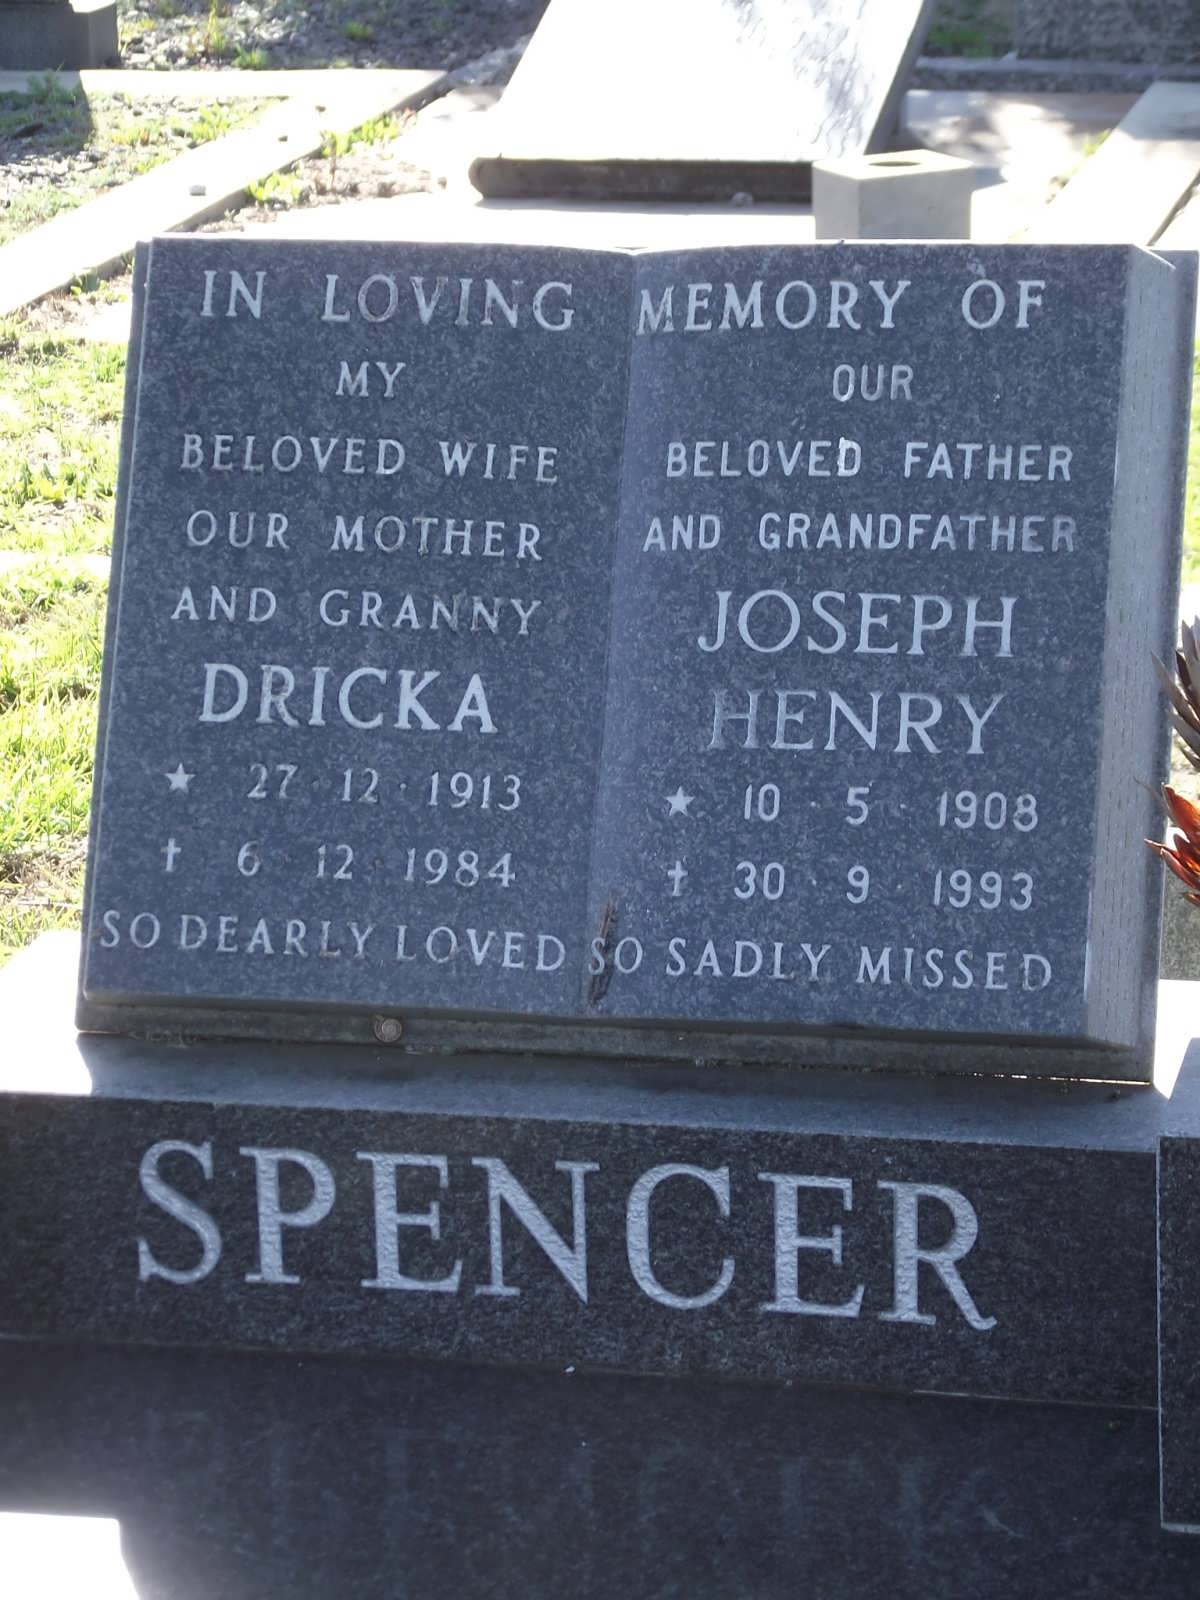 SPENCER Joseph Henry 1908-1993 & Dricka 1913-1984